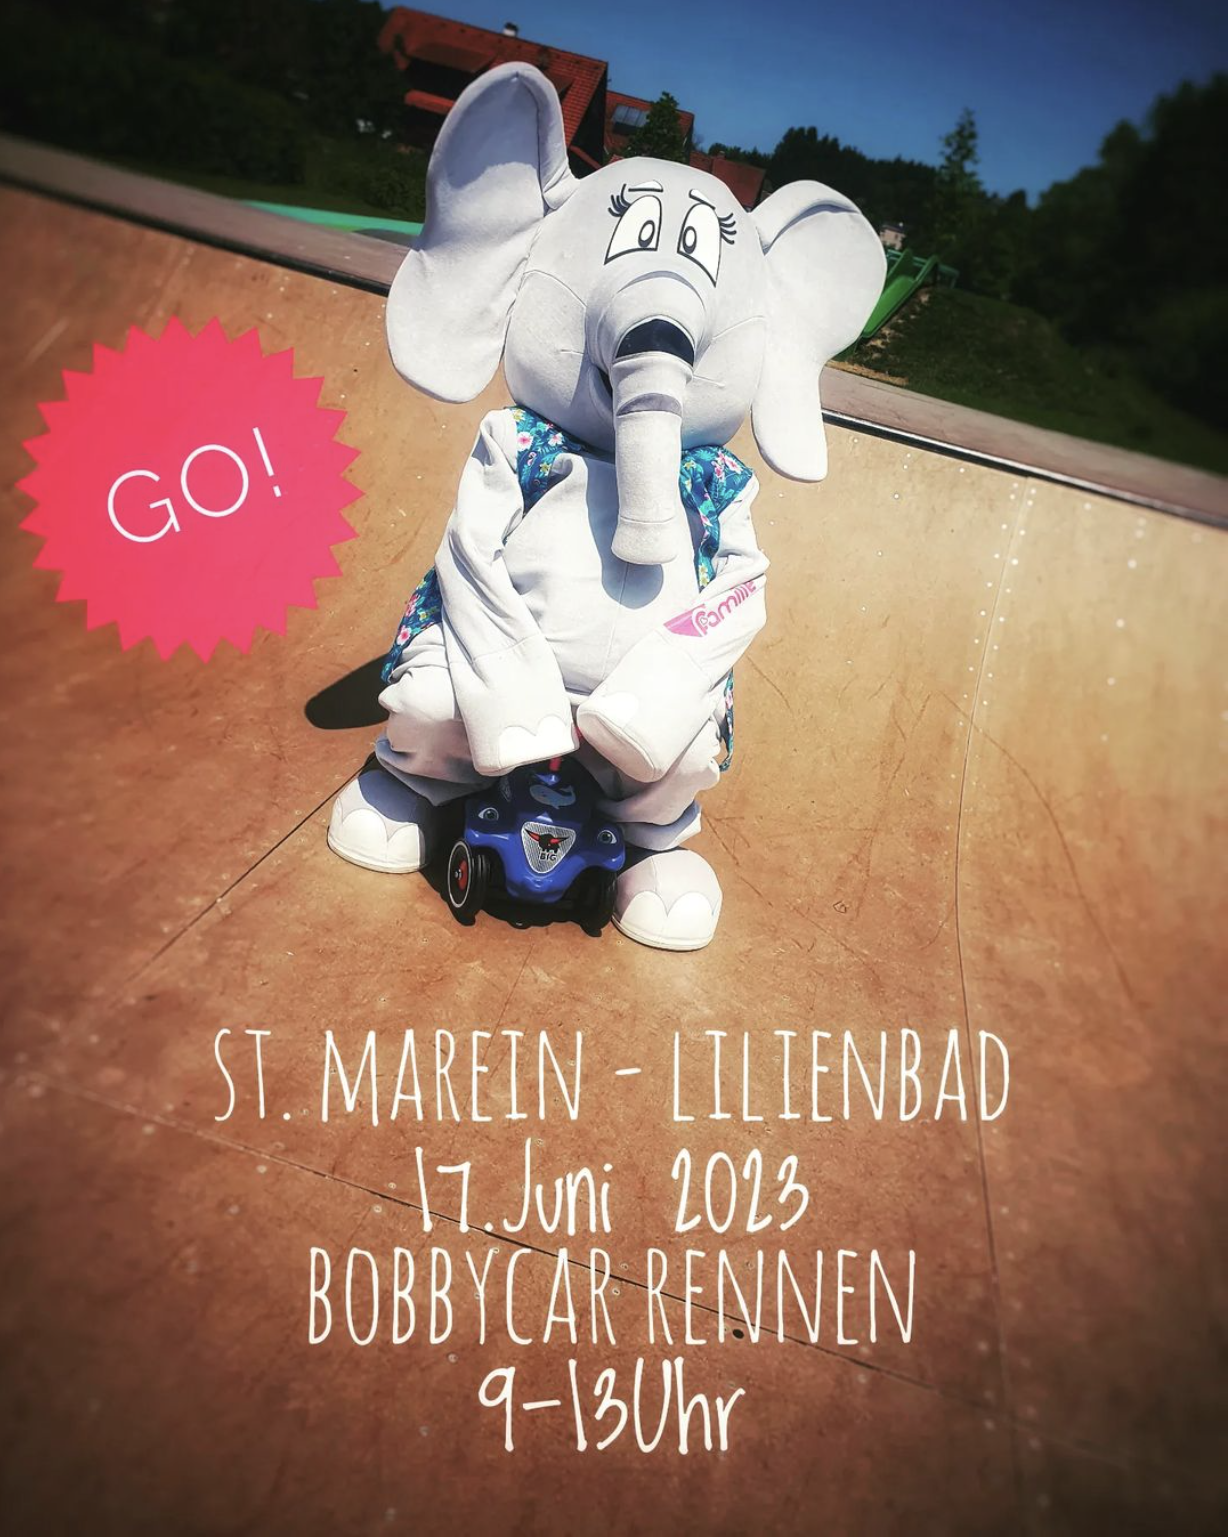 St. Marein– Lilienbad, Bobby-Car-Rennen, Charity Event